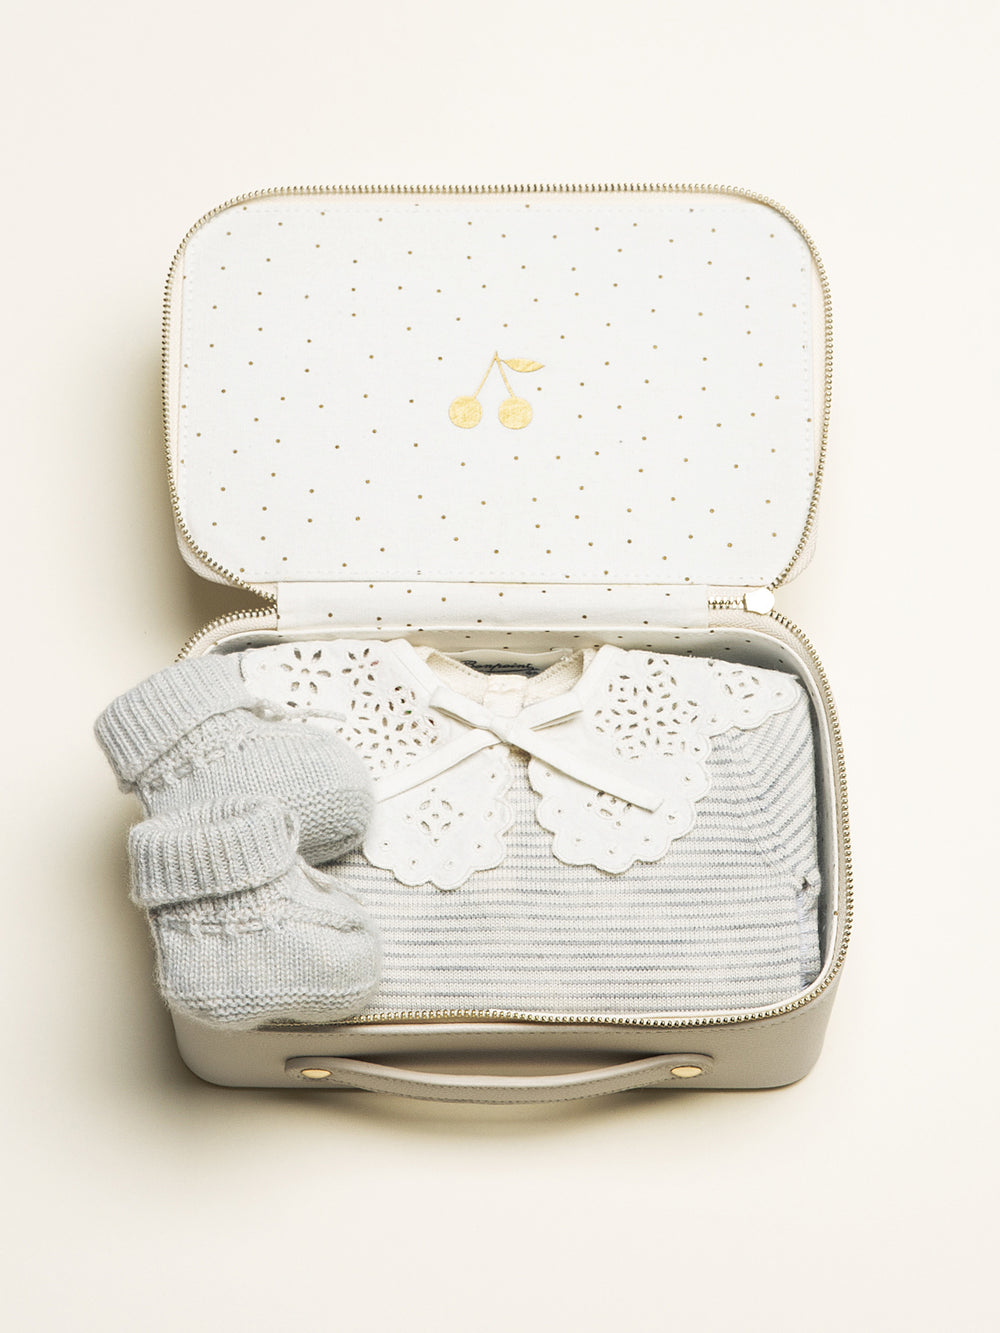 Small unisex birth suitcase grey jumpsuit